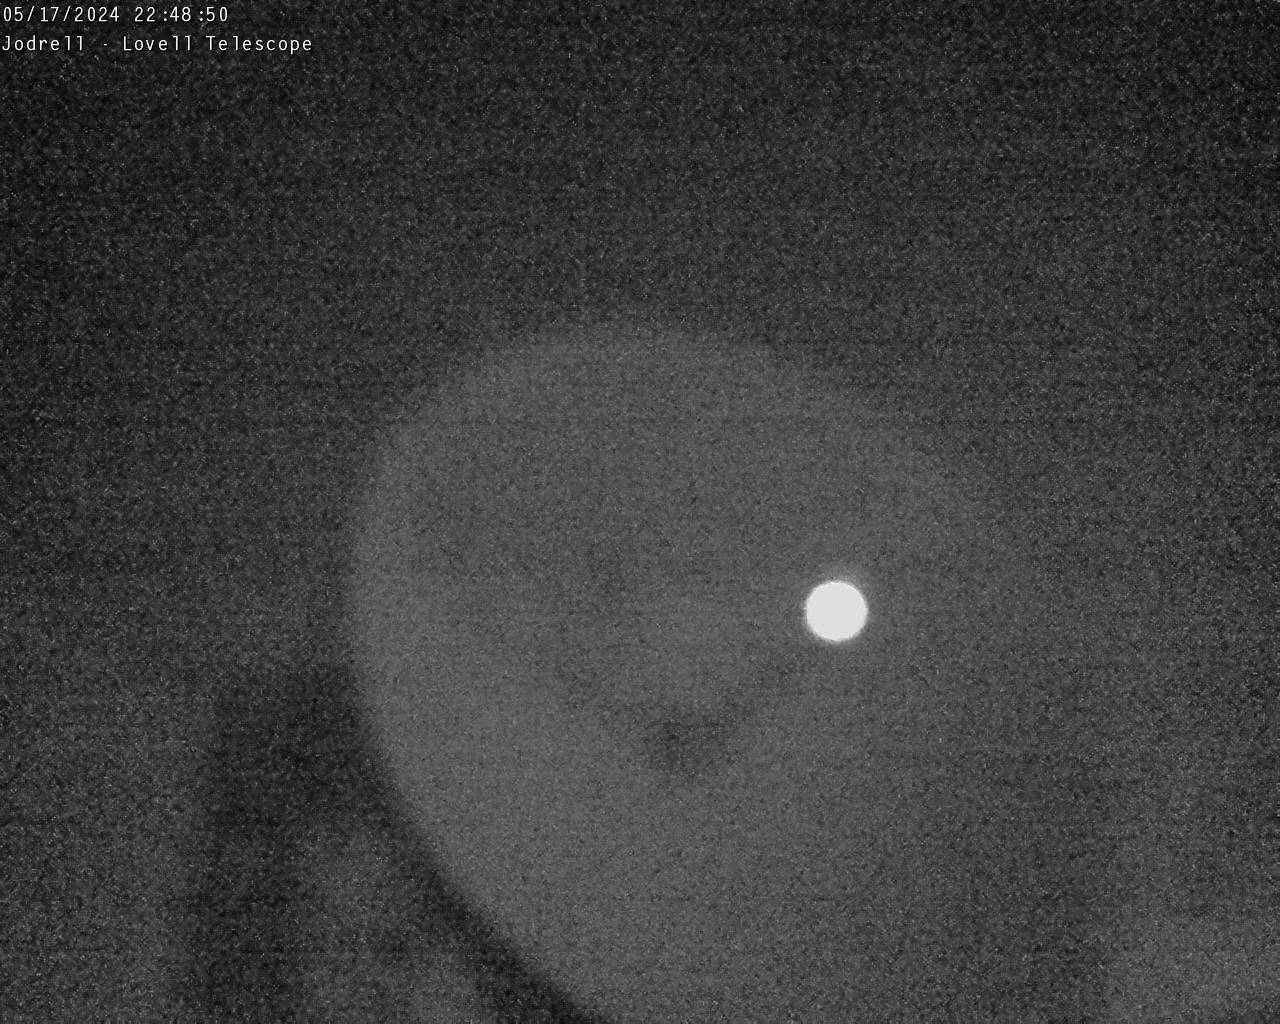 Observatorio Jodrell Bank Vie. 22:49